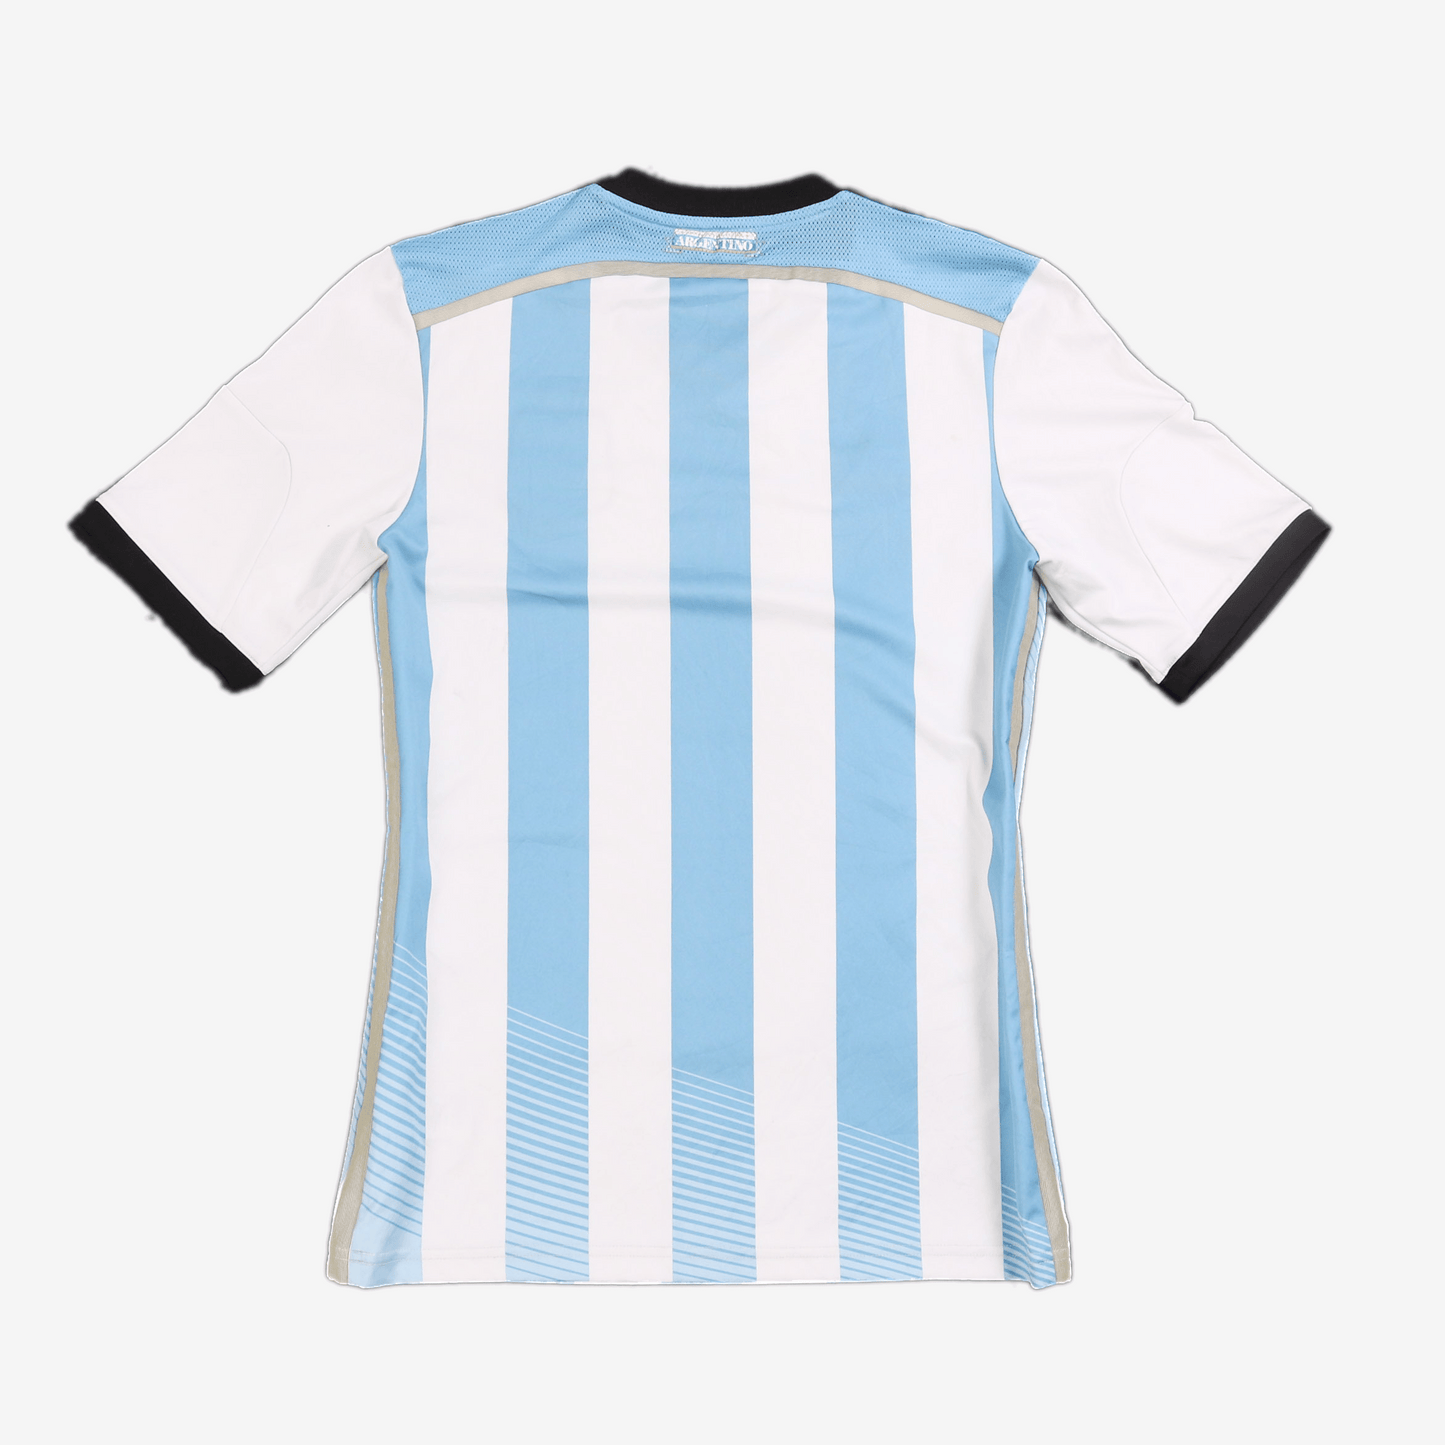 Argentina Football Shirt - American Madness